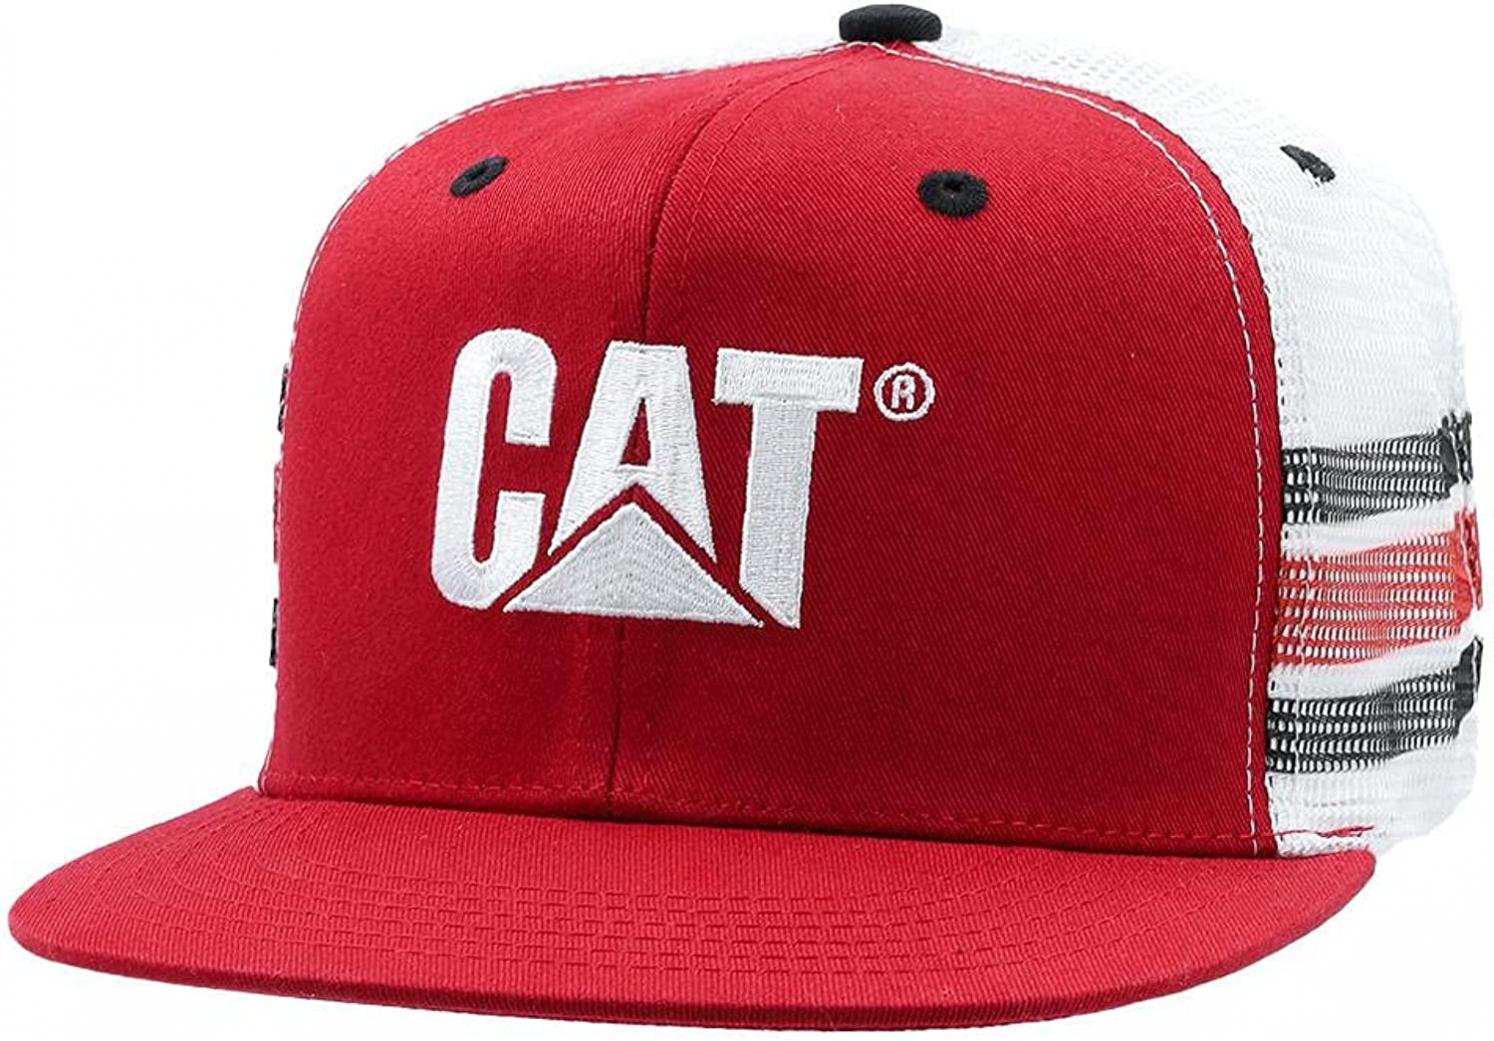 Caterpillar Red & Black Striped White Mesh Back Snapback Flat Bill Hat/Cap